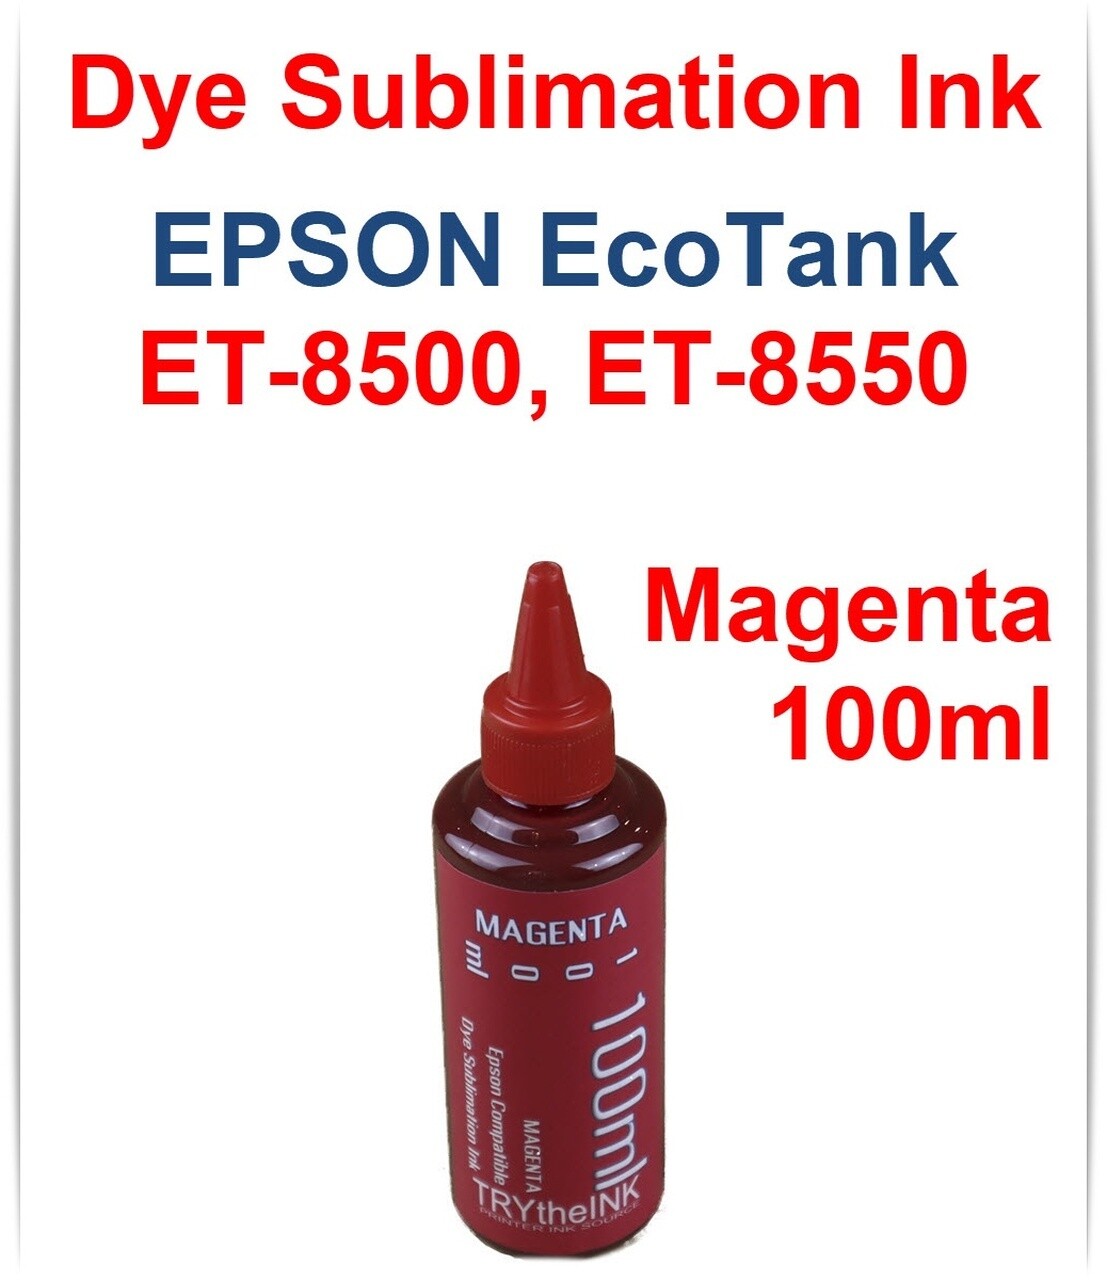 Magenta Dye Sublimation Ink 100ml bottle for EPSON EcoTank ET-8500 ET-8550 printers